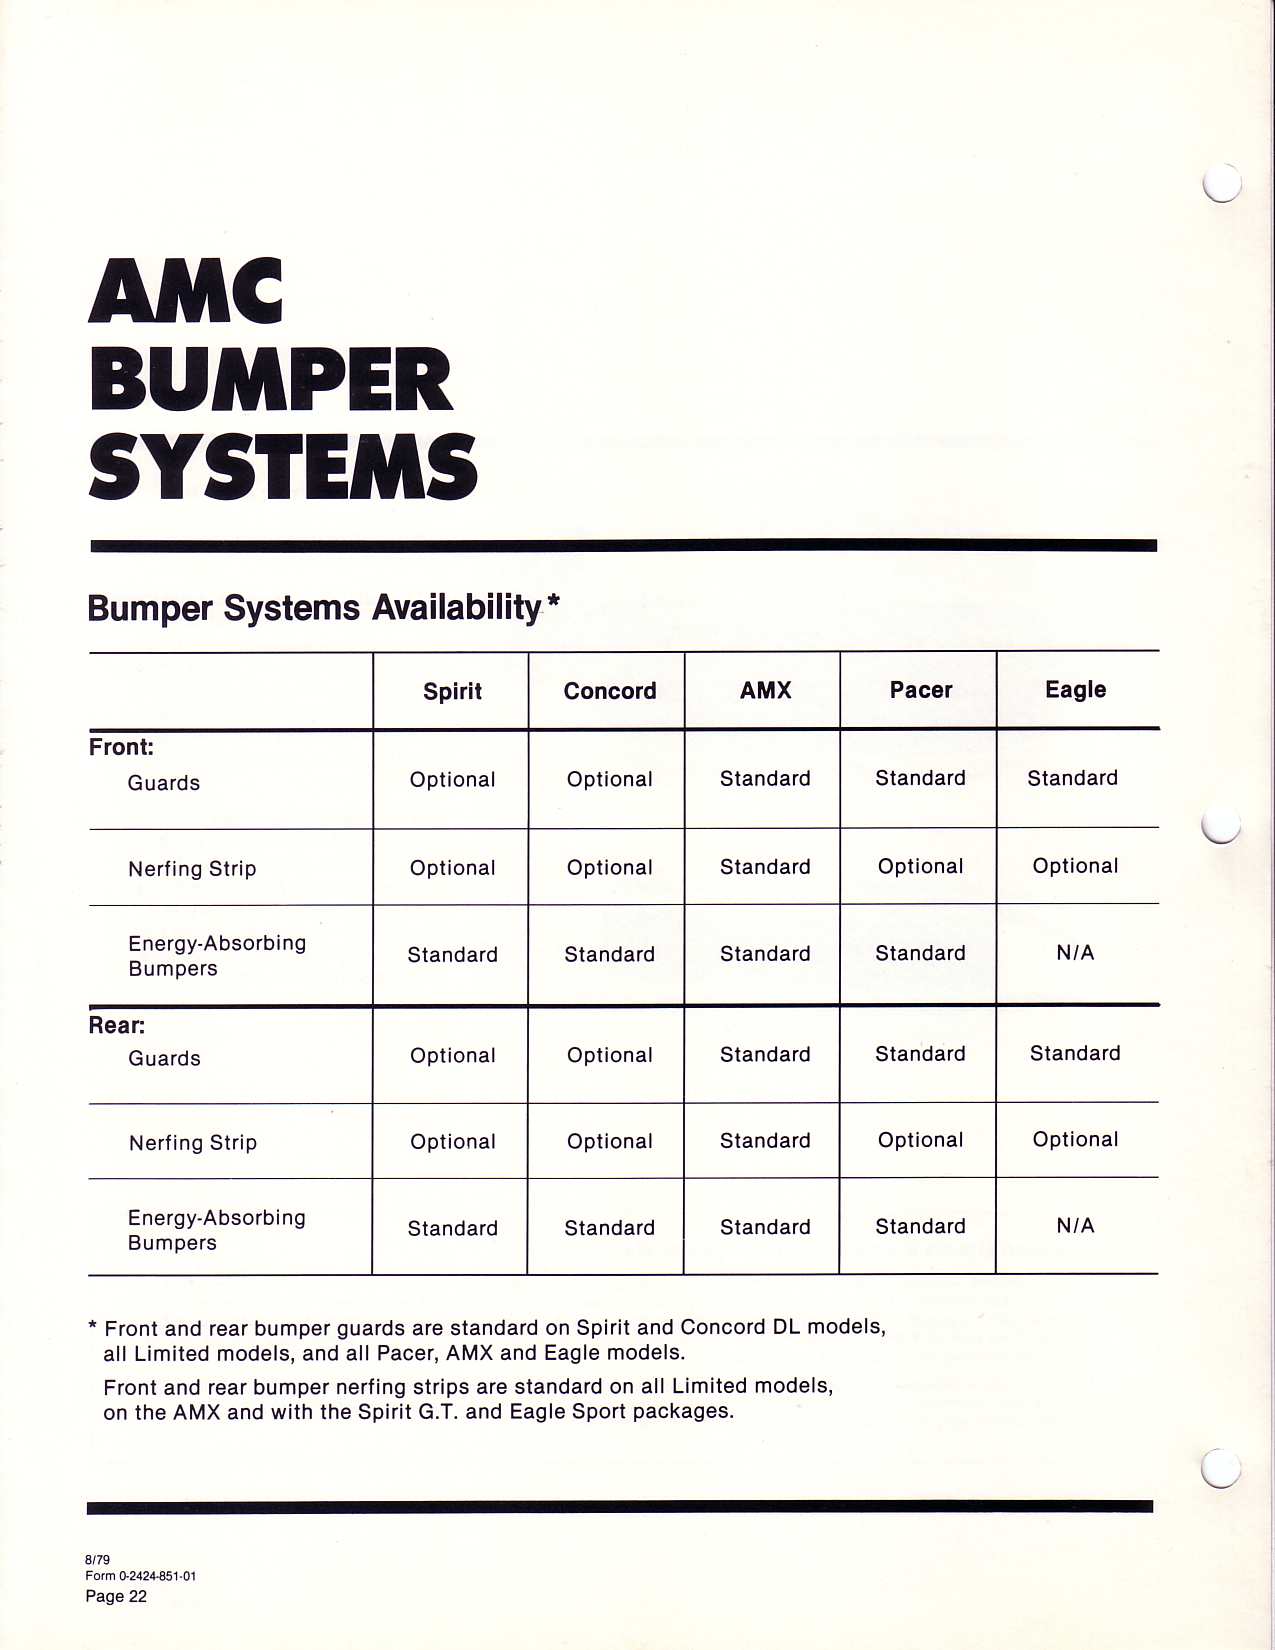 1980 AMC Data Book-B22